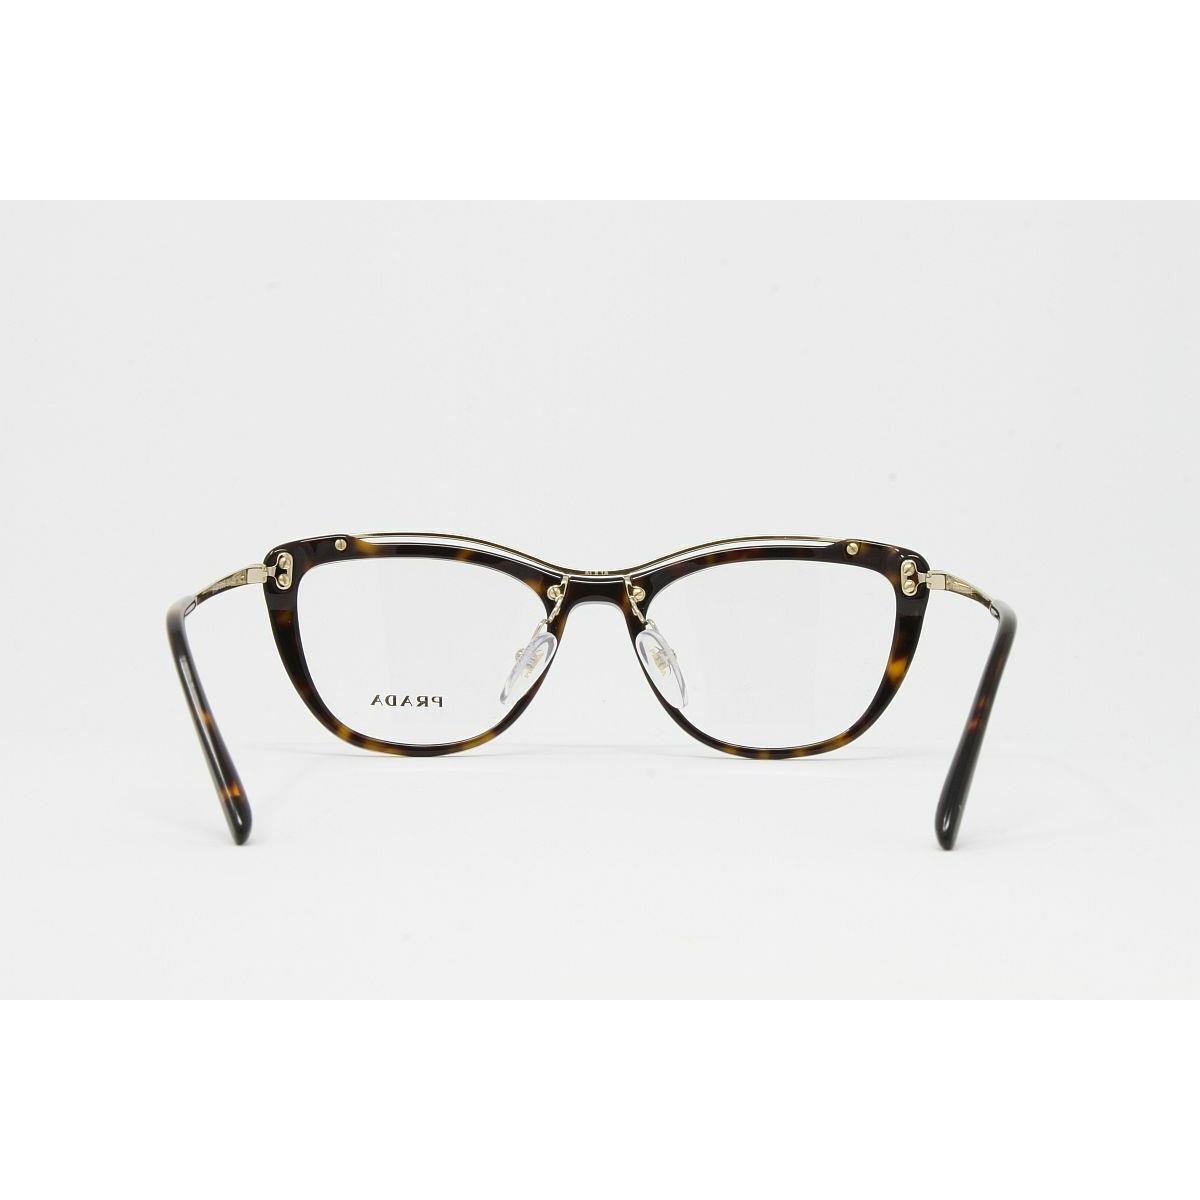 Prada eyeglasses  - Havana Frame 2